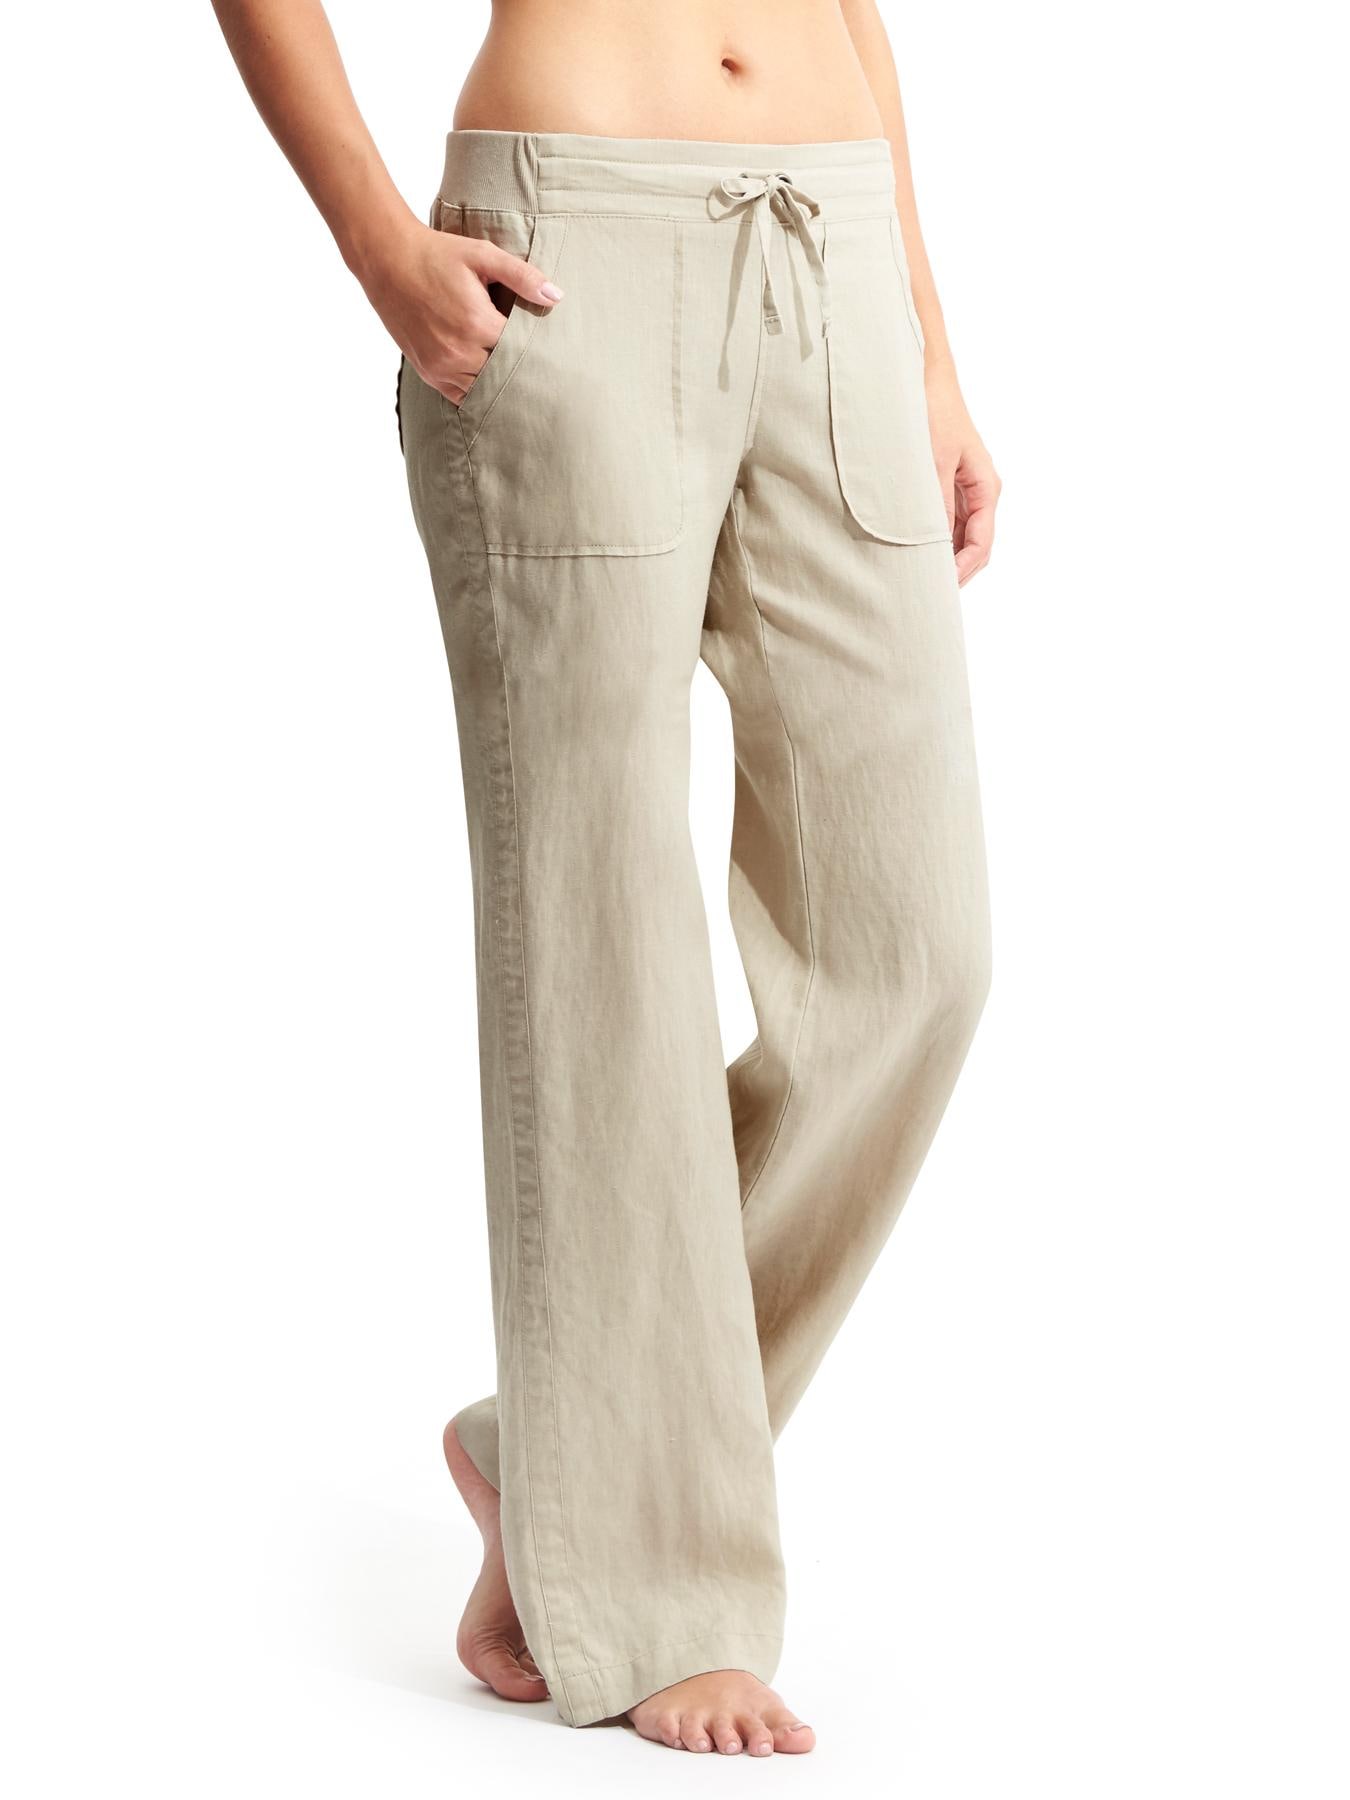 Pants Linen By Athleta Size: 10